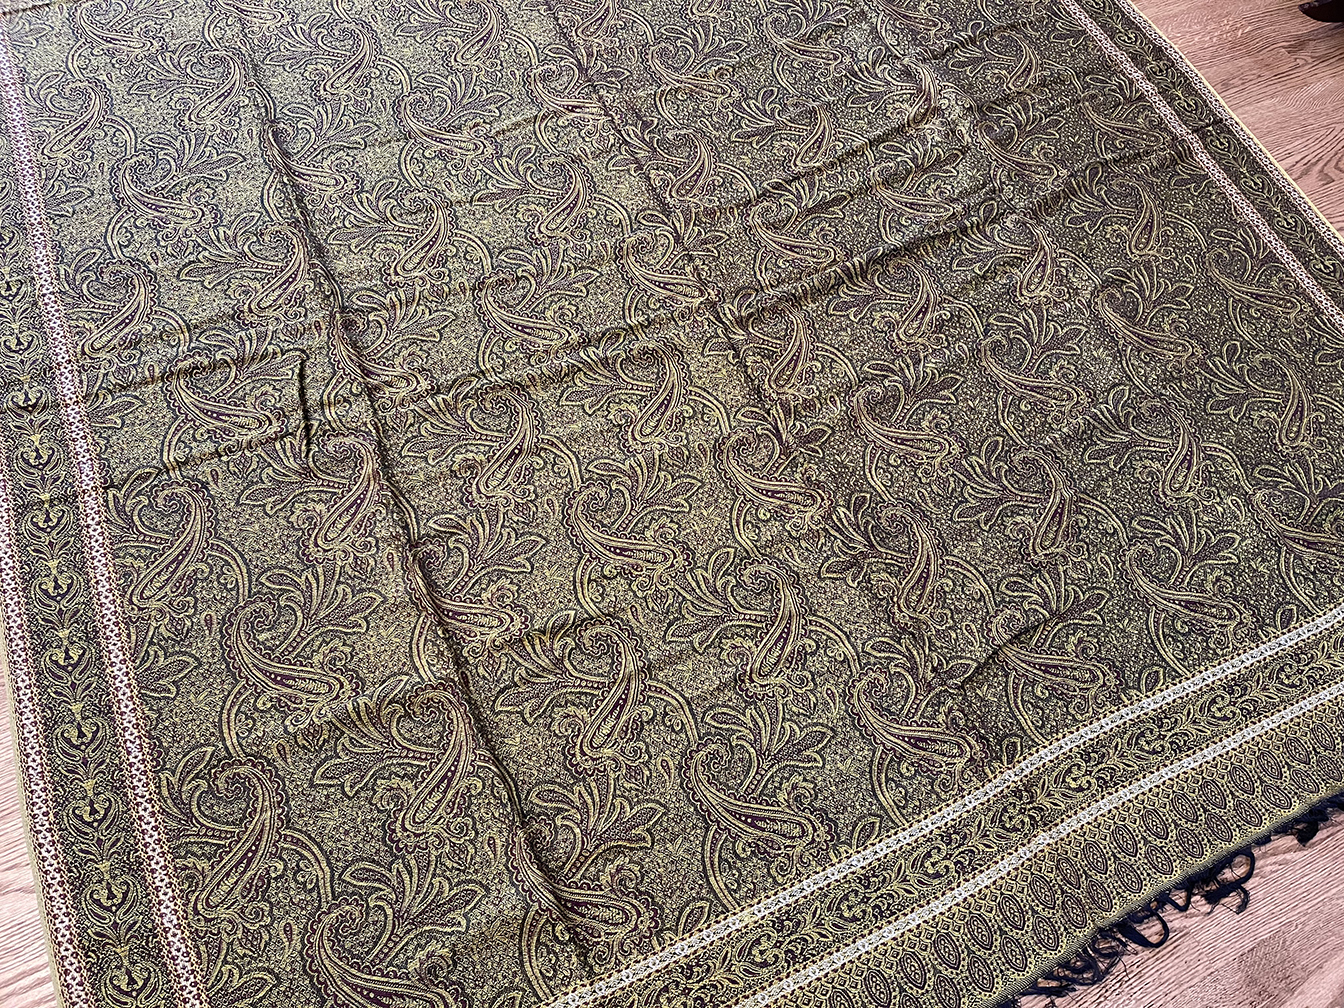 Antique paisley shawl - # 91331